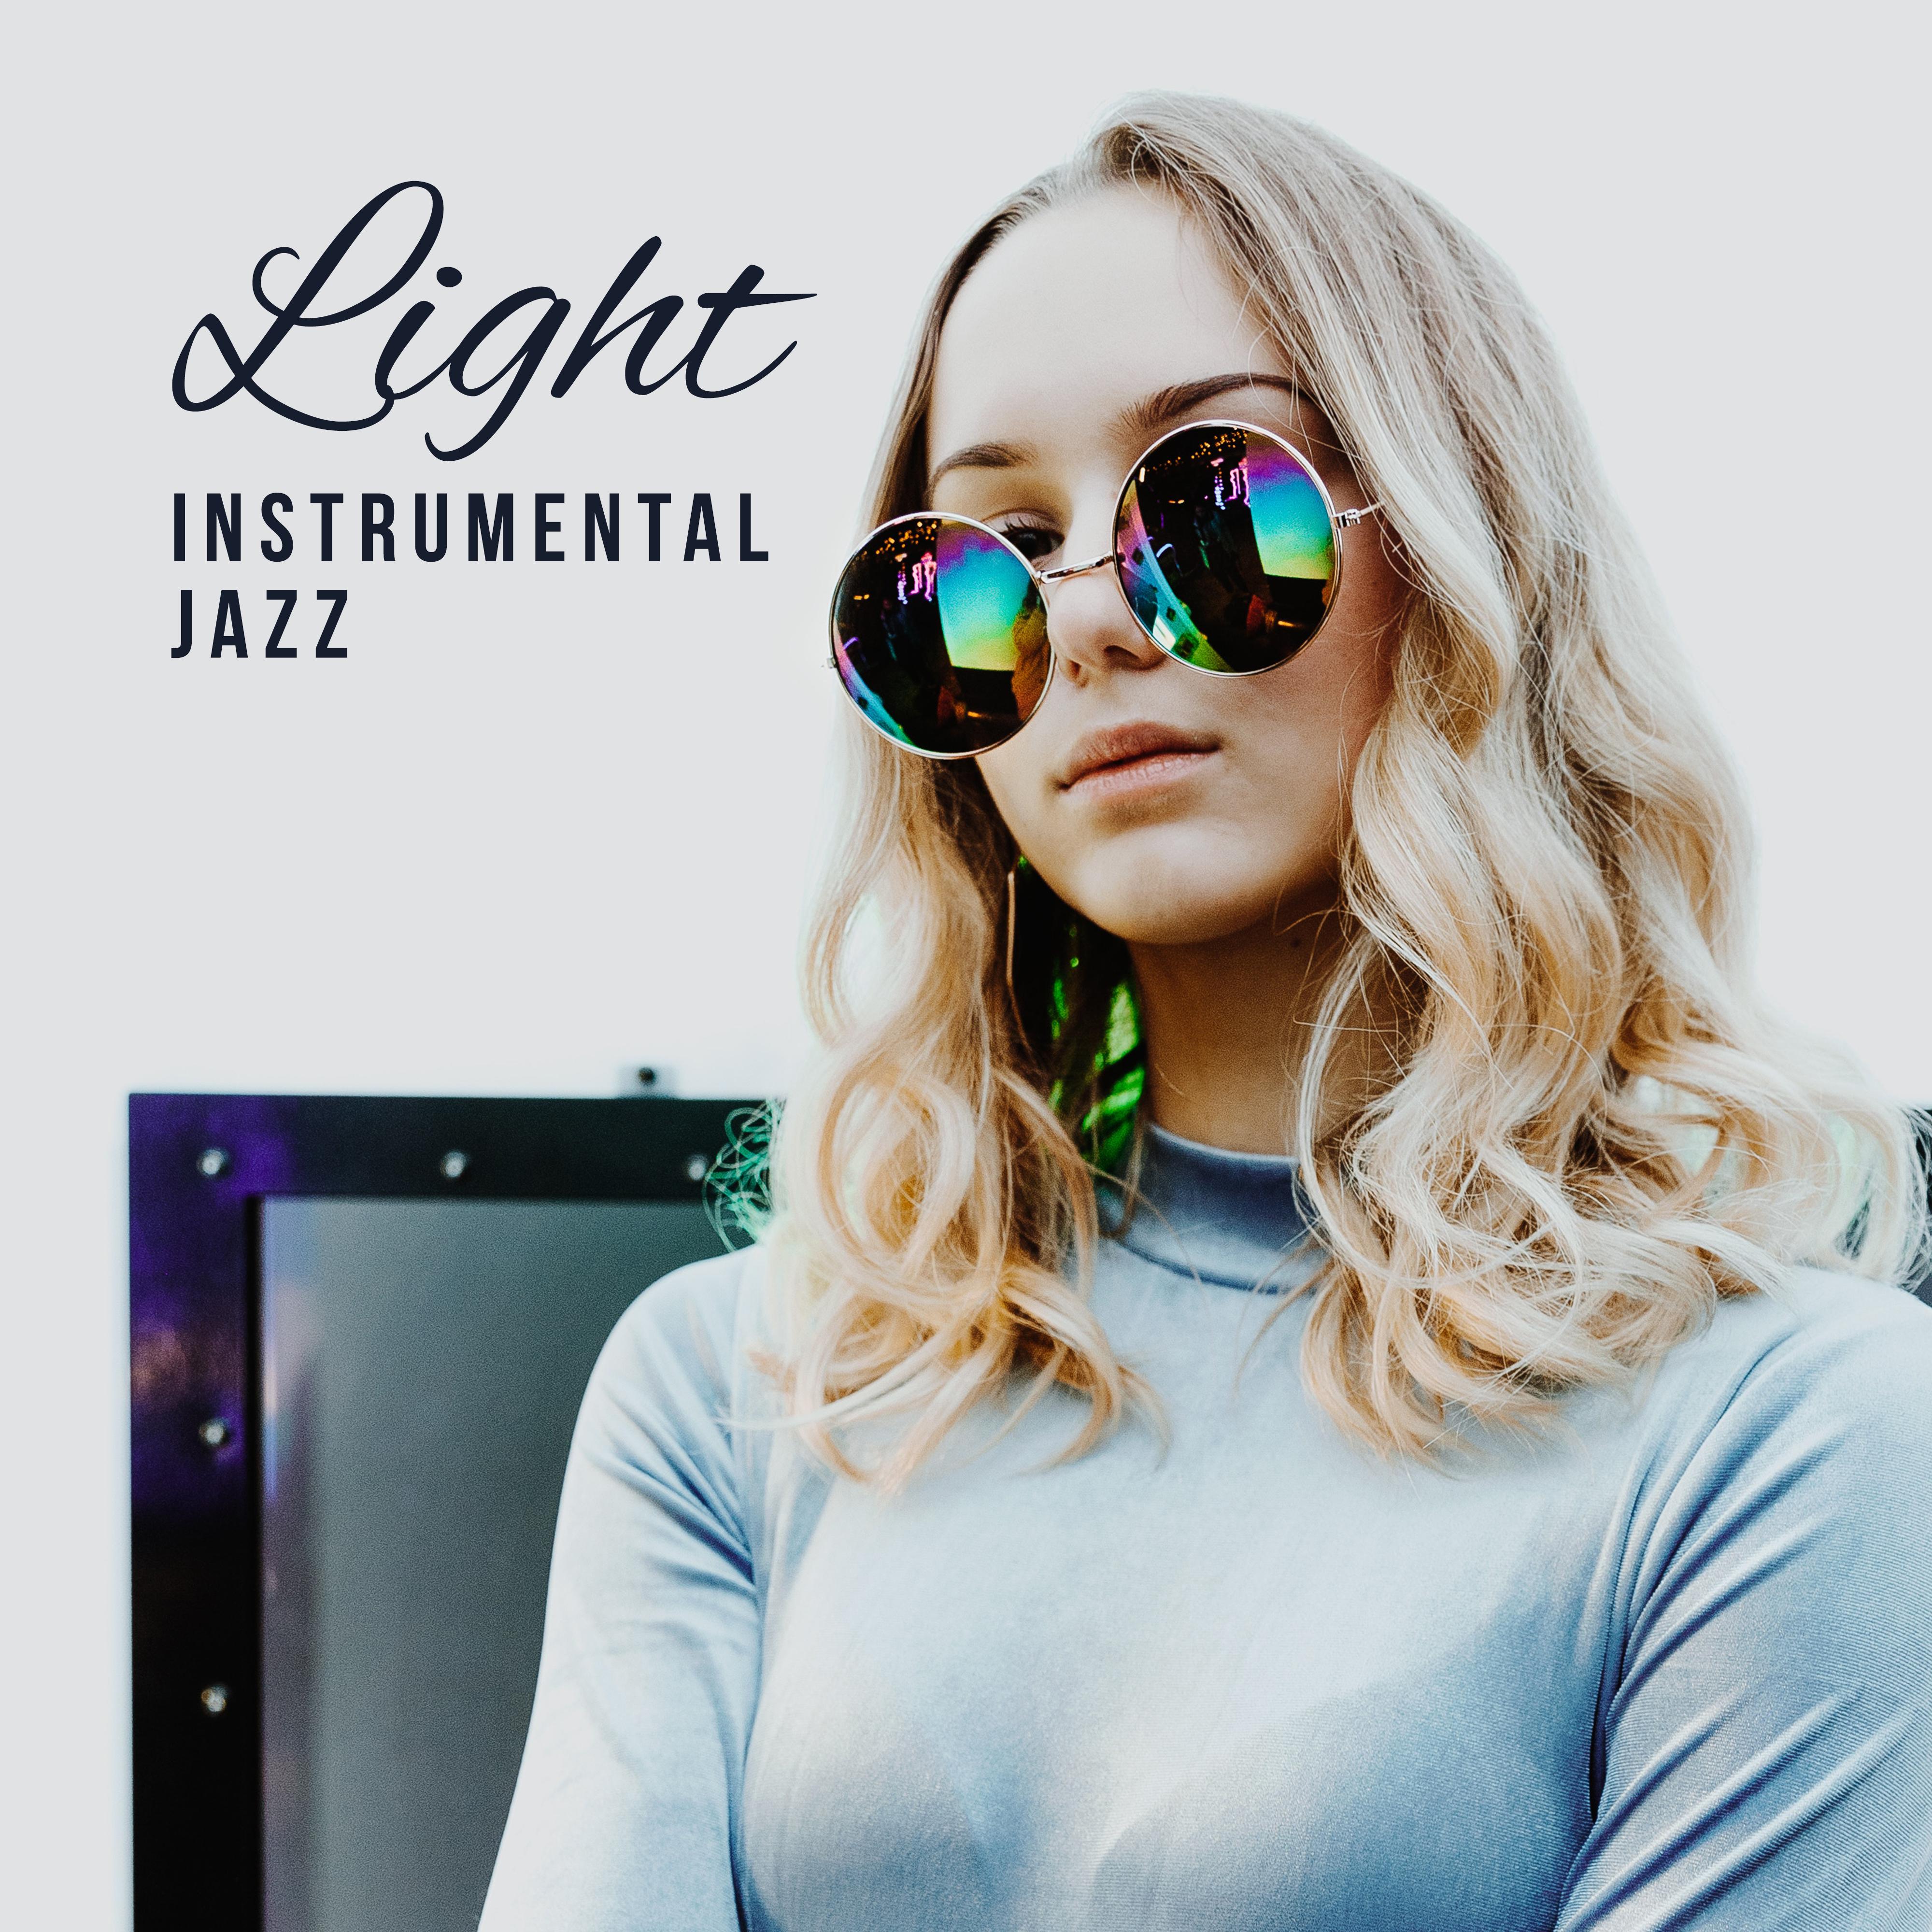 Light Instrumental Jazz - Smooth Jazz for Relaxation, Restaurant, Coffee, Jazz Relaxation 2019, Classical Jazz to Calm Down